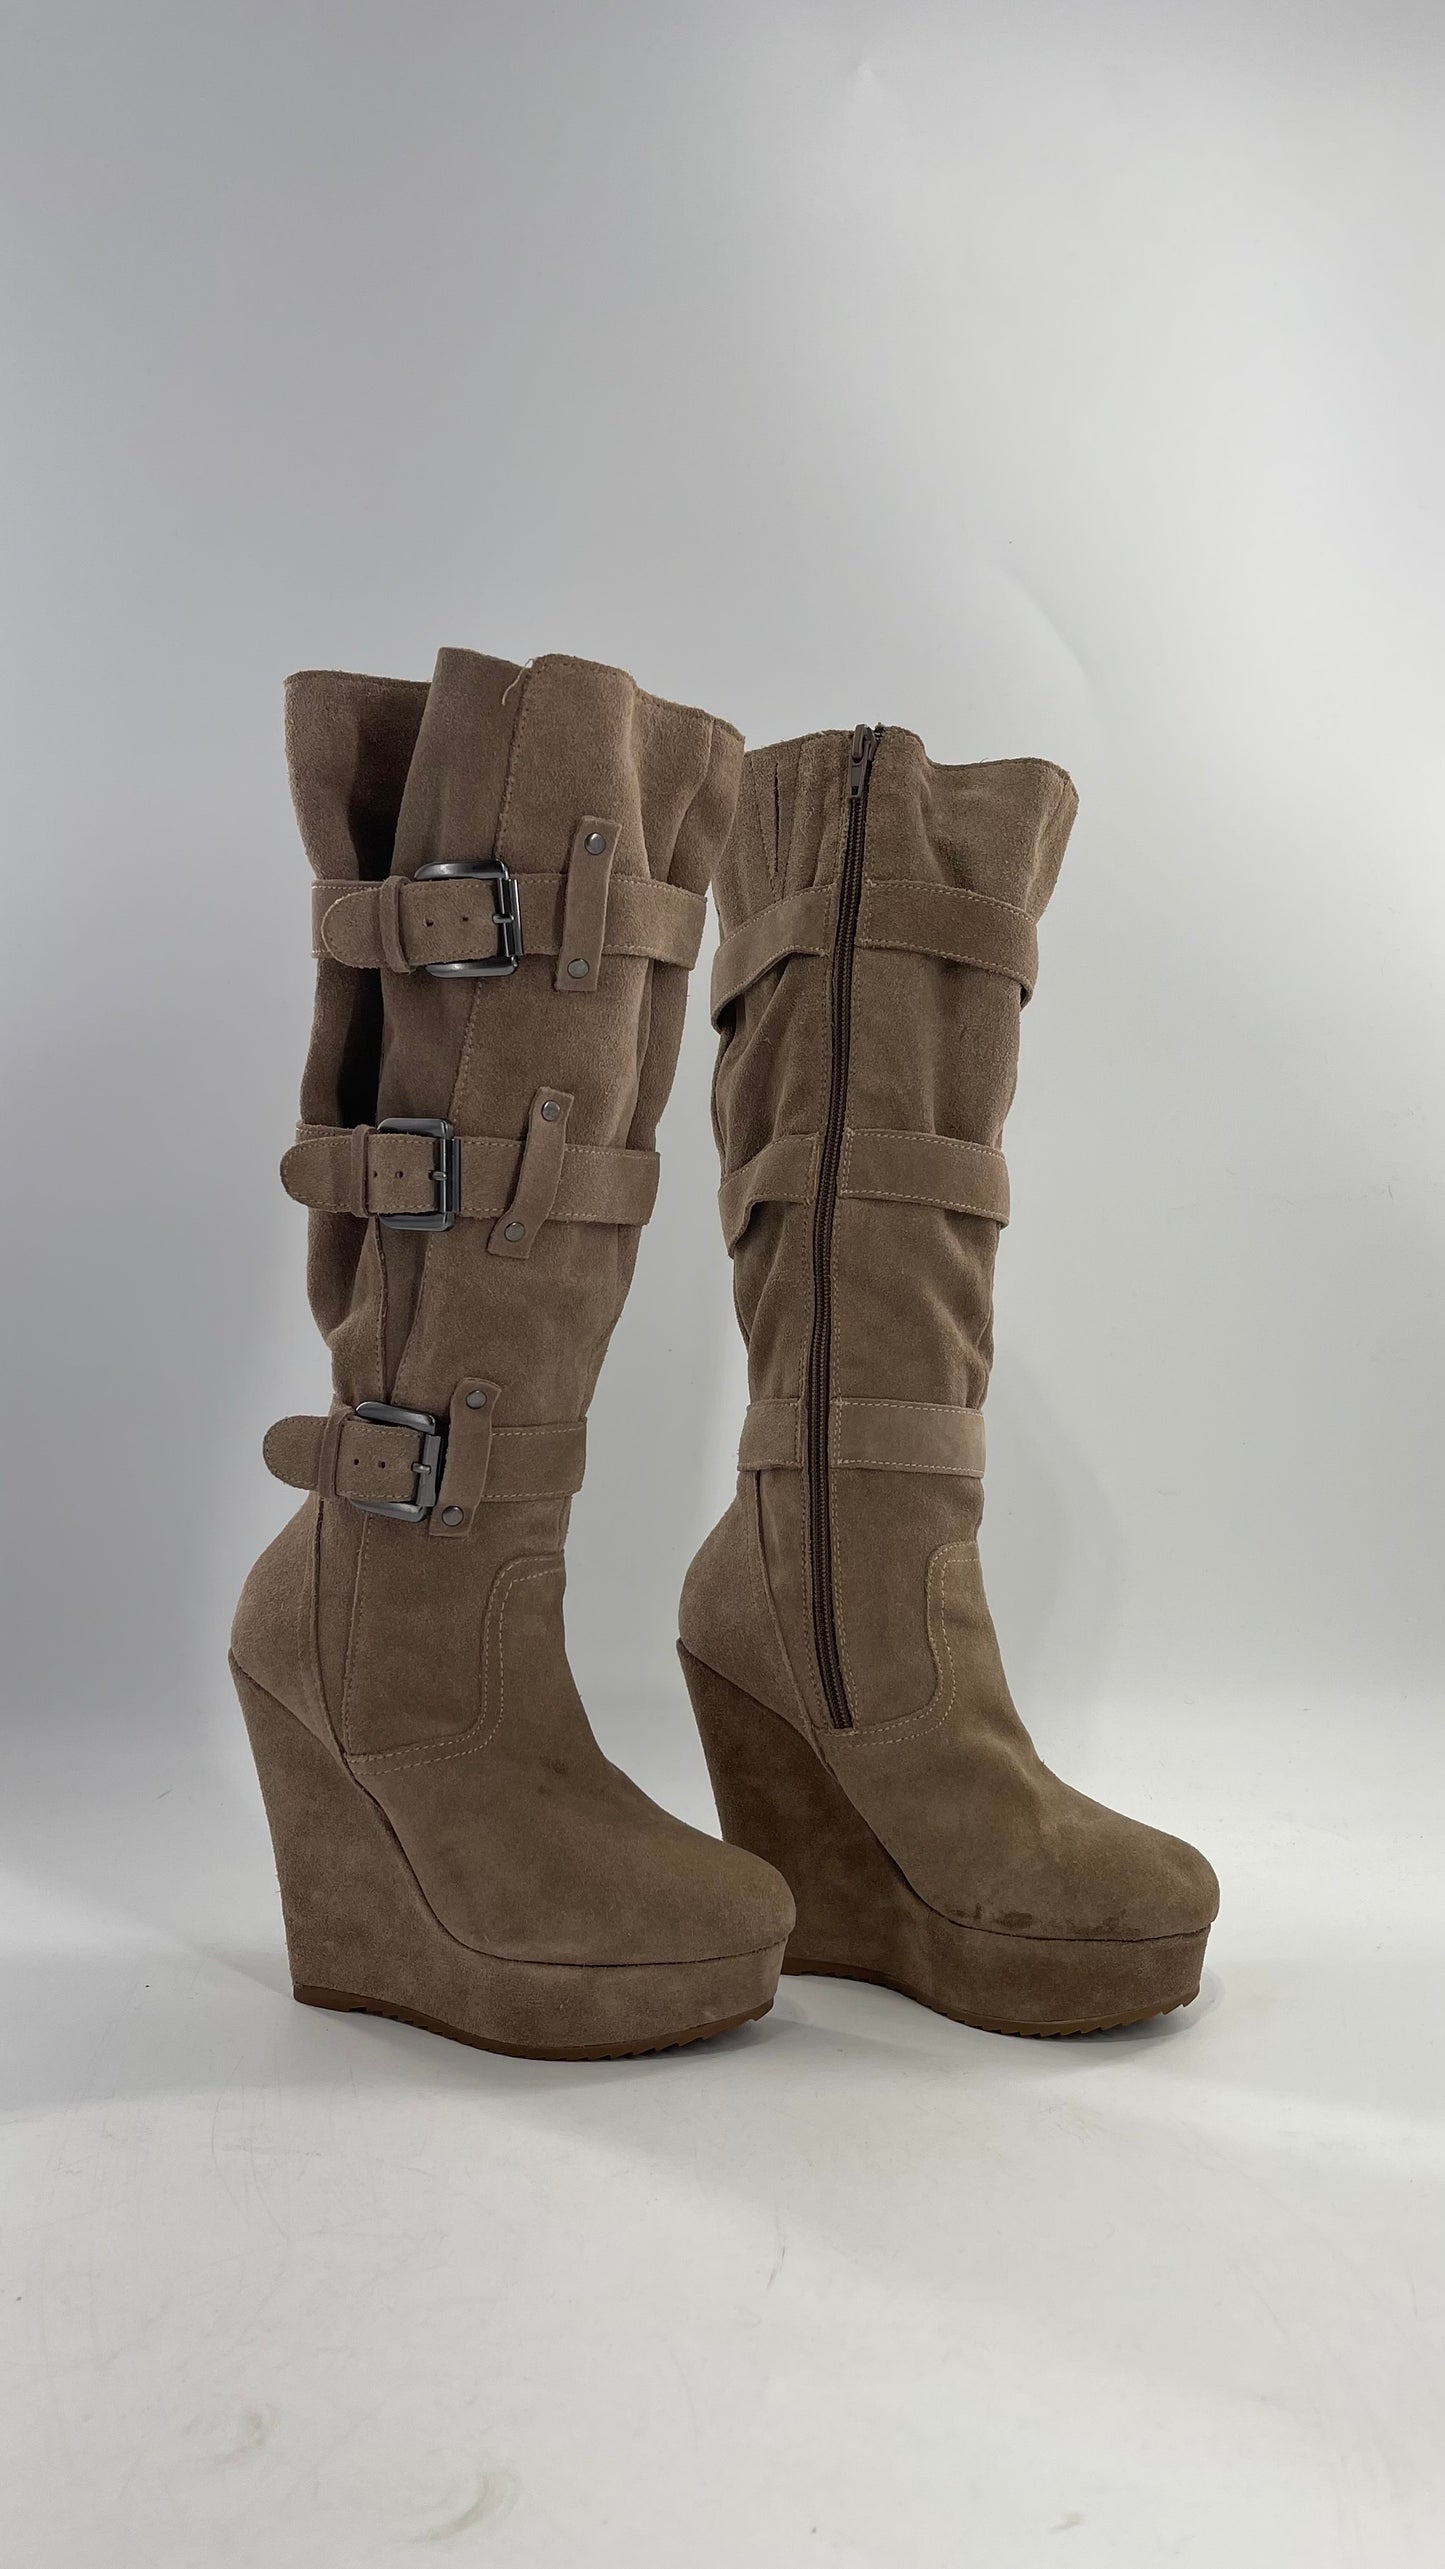 Vintage Bakers Genuine Suede Leather Gray/Tan Wedge Platform Knee High Boots with Gun Metal Buckles (6)